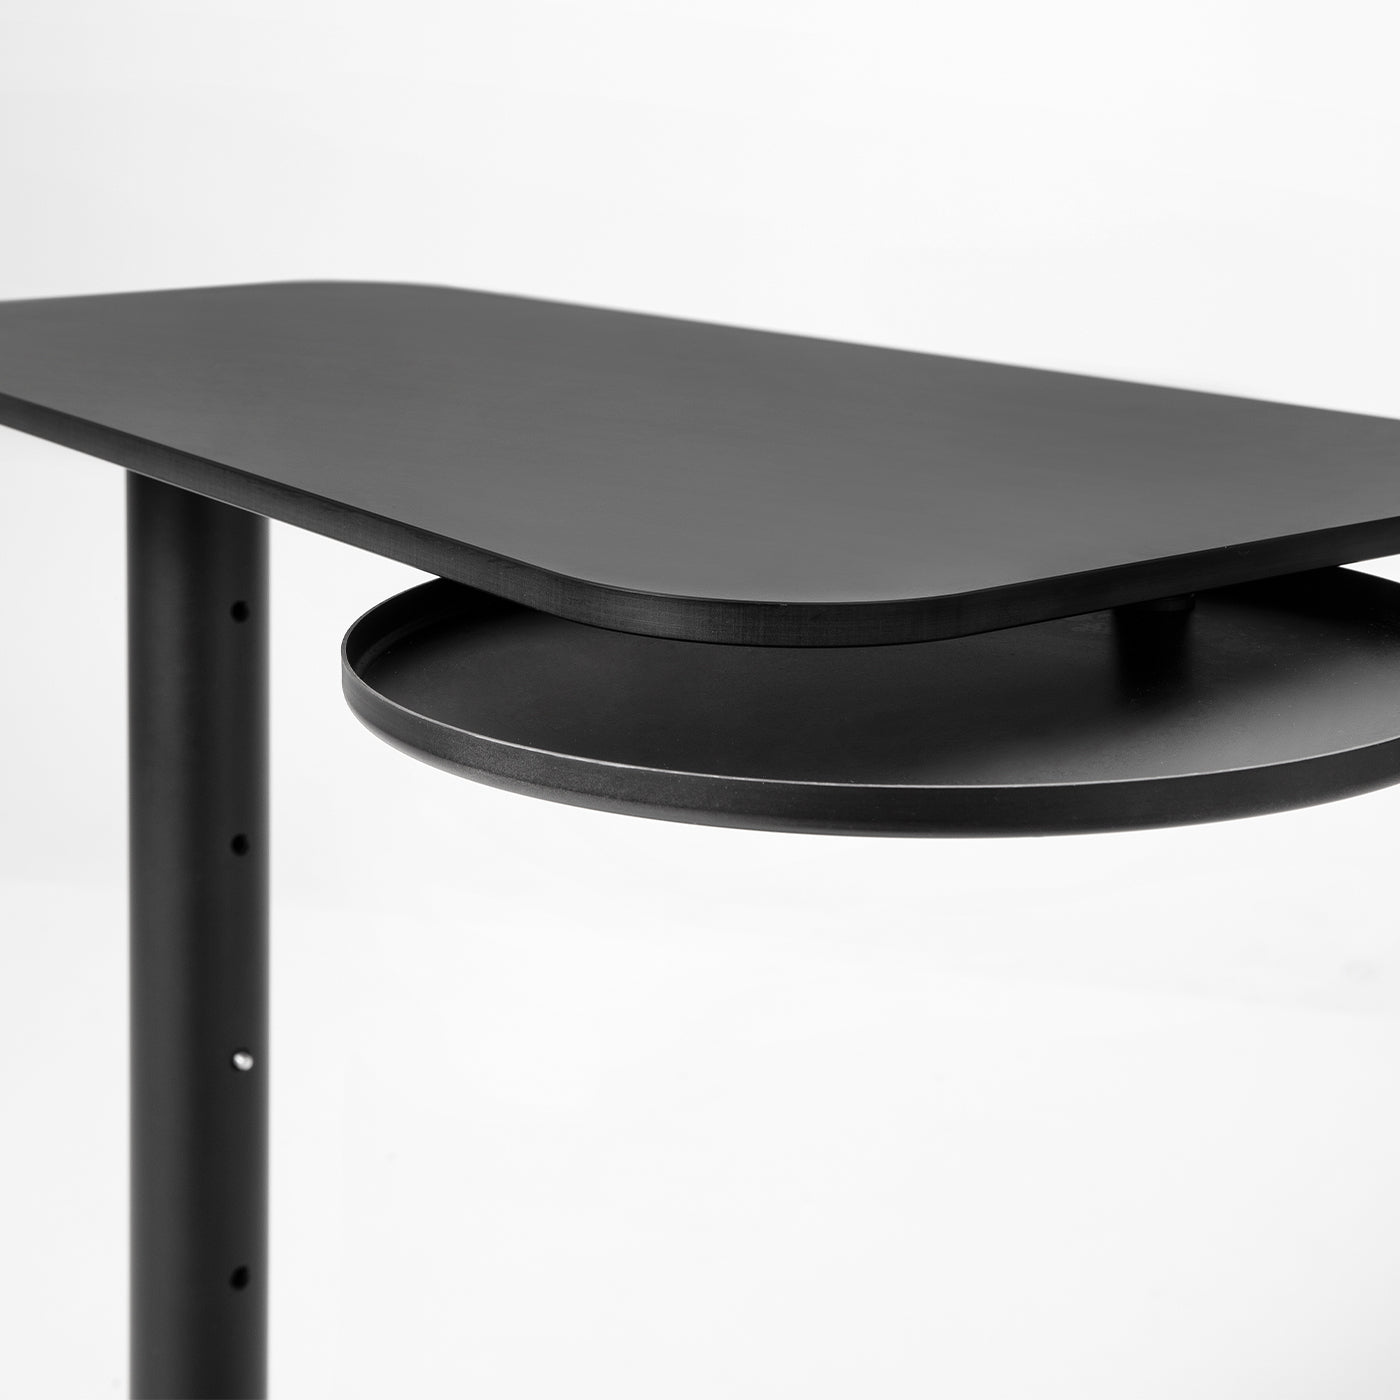 0130 Jens Black Side Table by Massimo Broglio - Alternative view 2